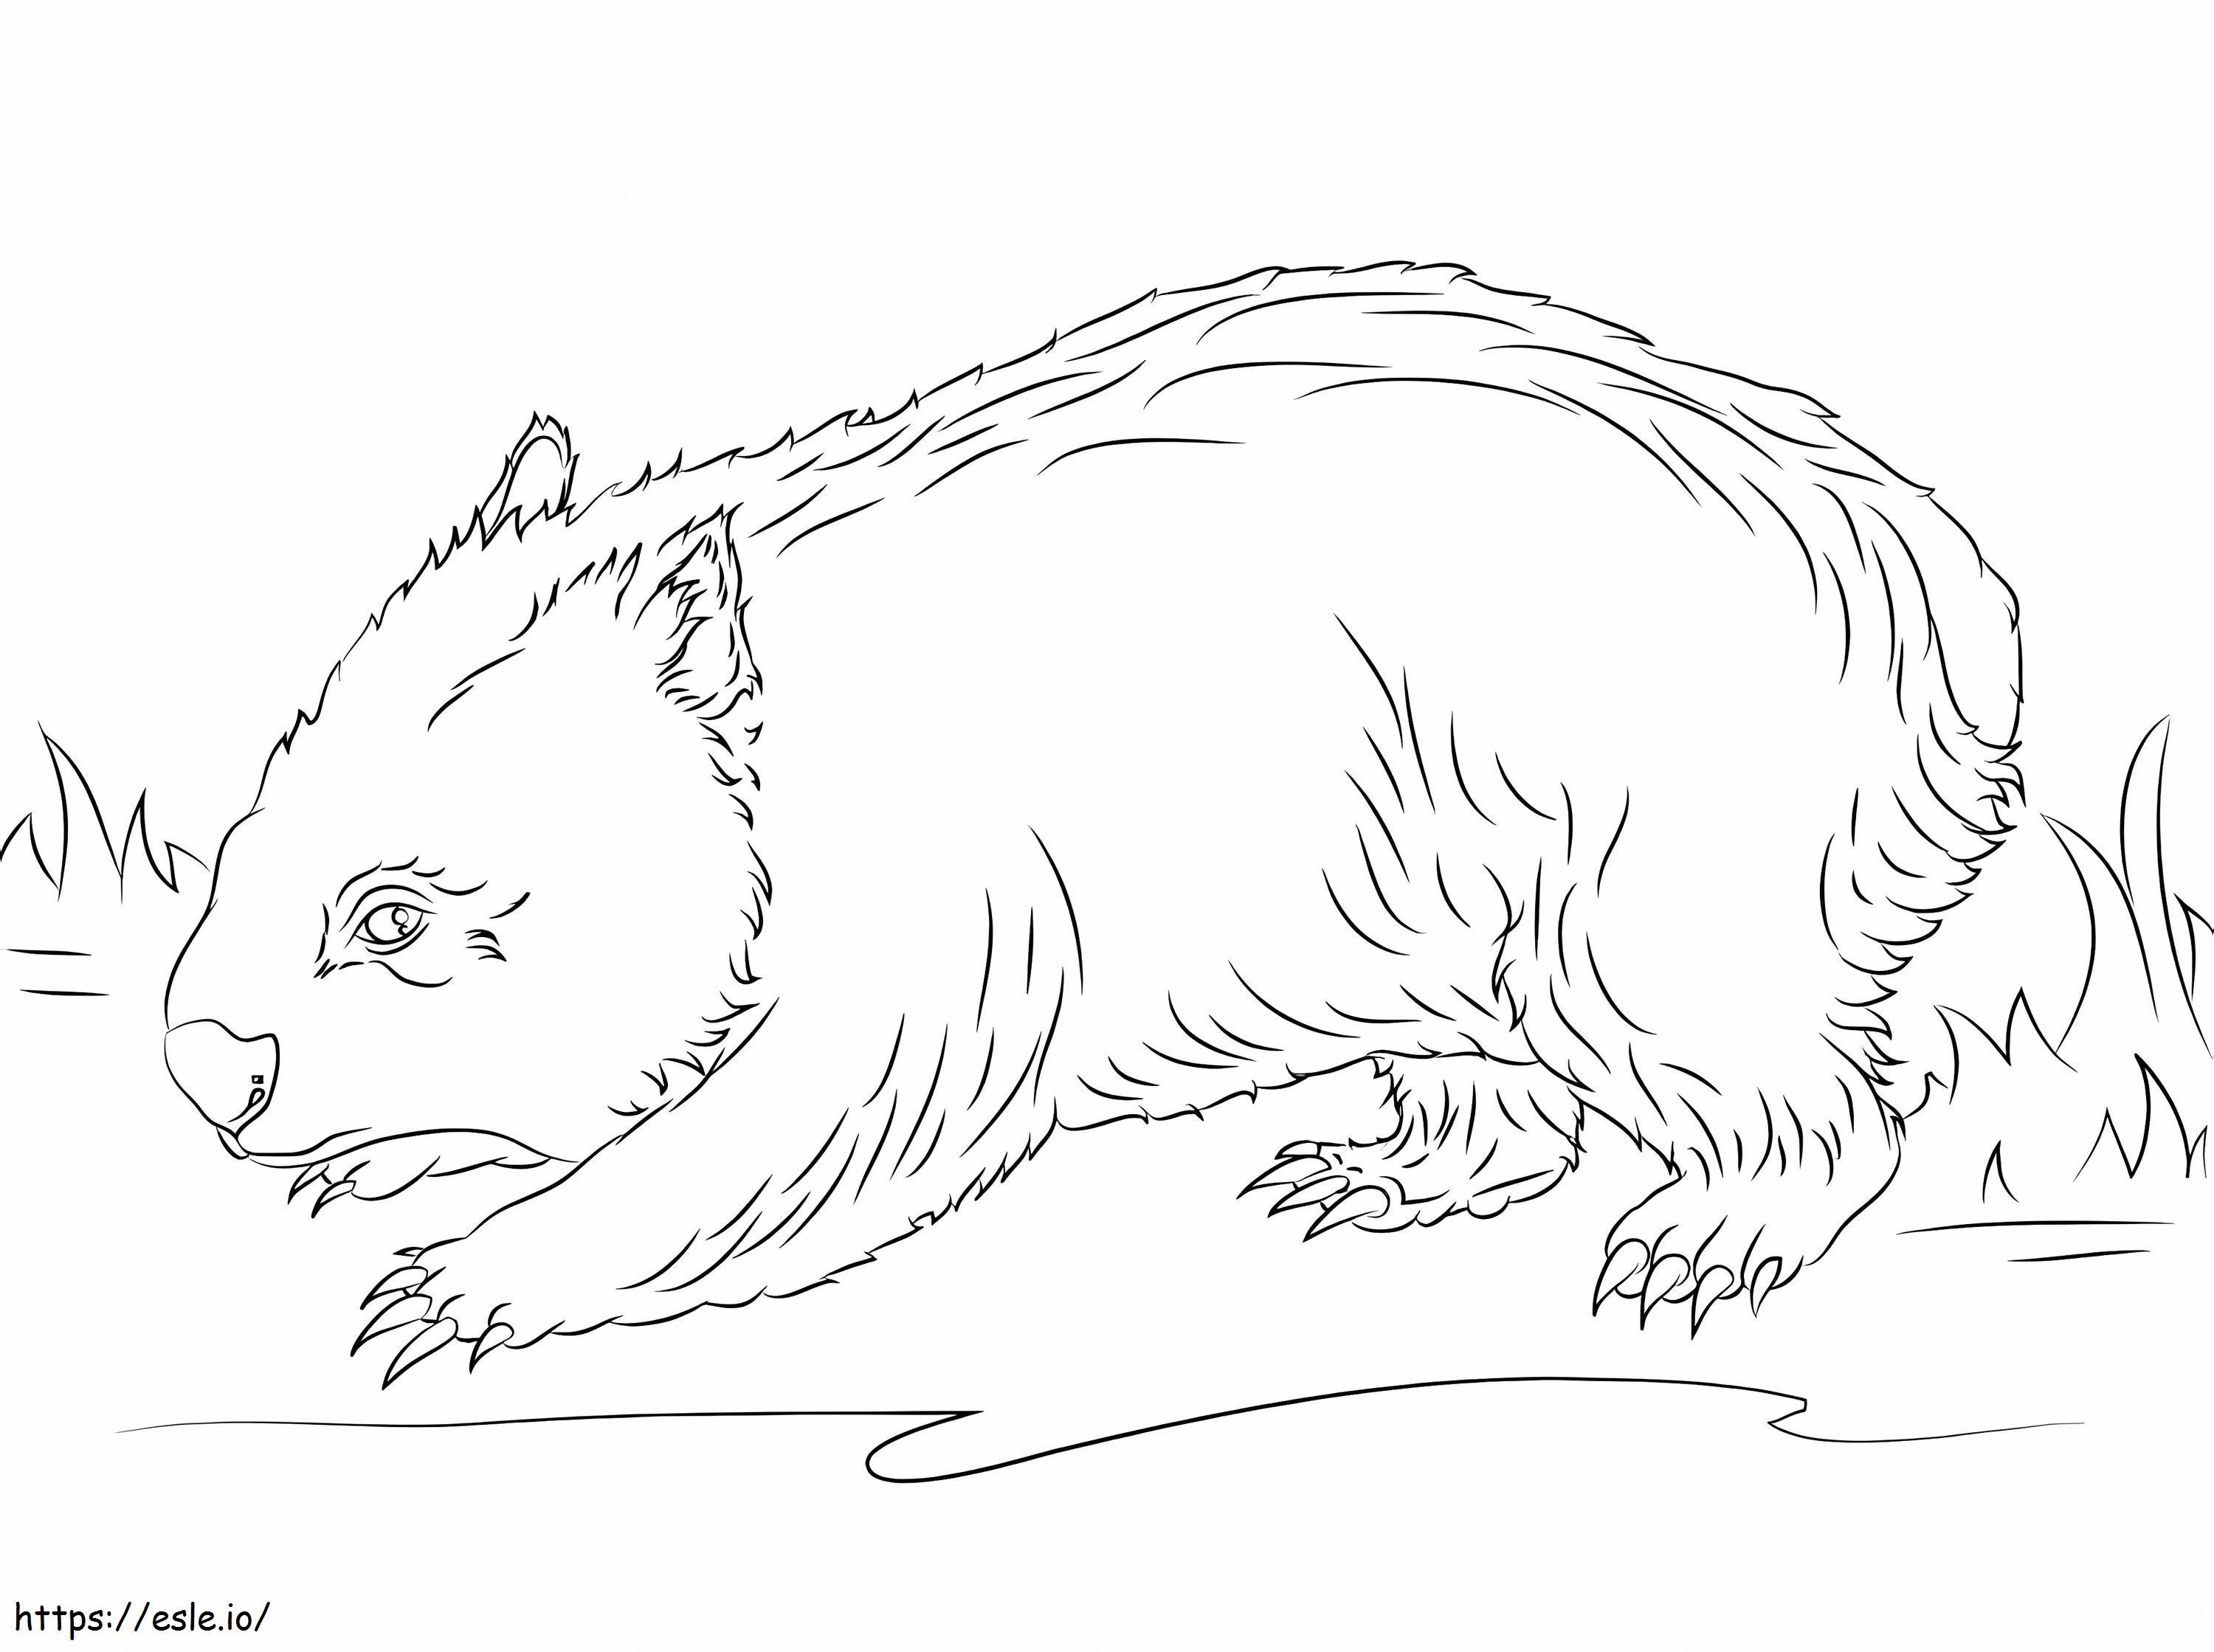 Normalny Wombat kolorowanka